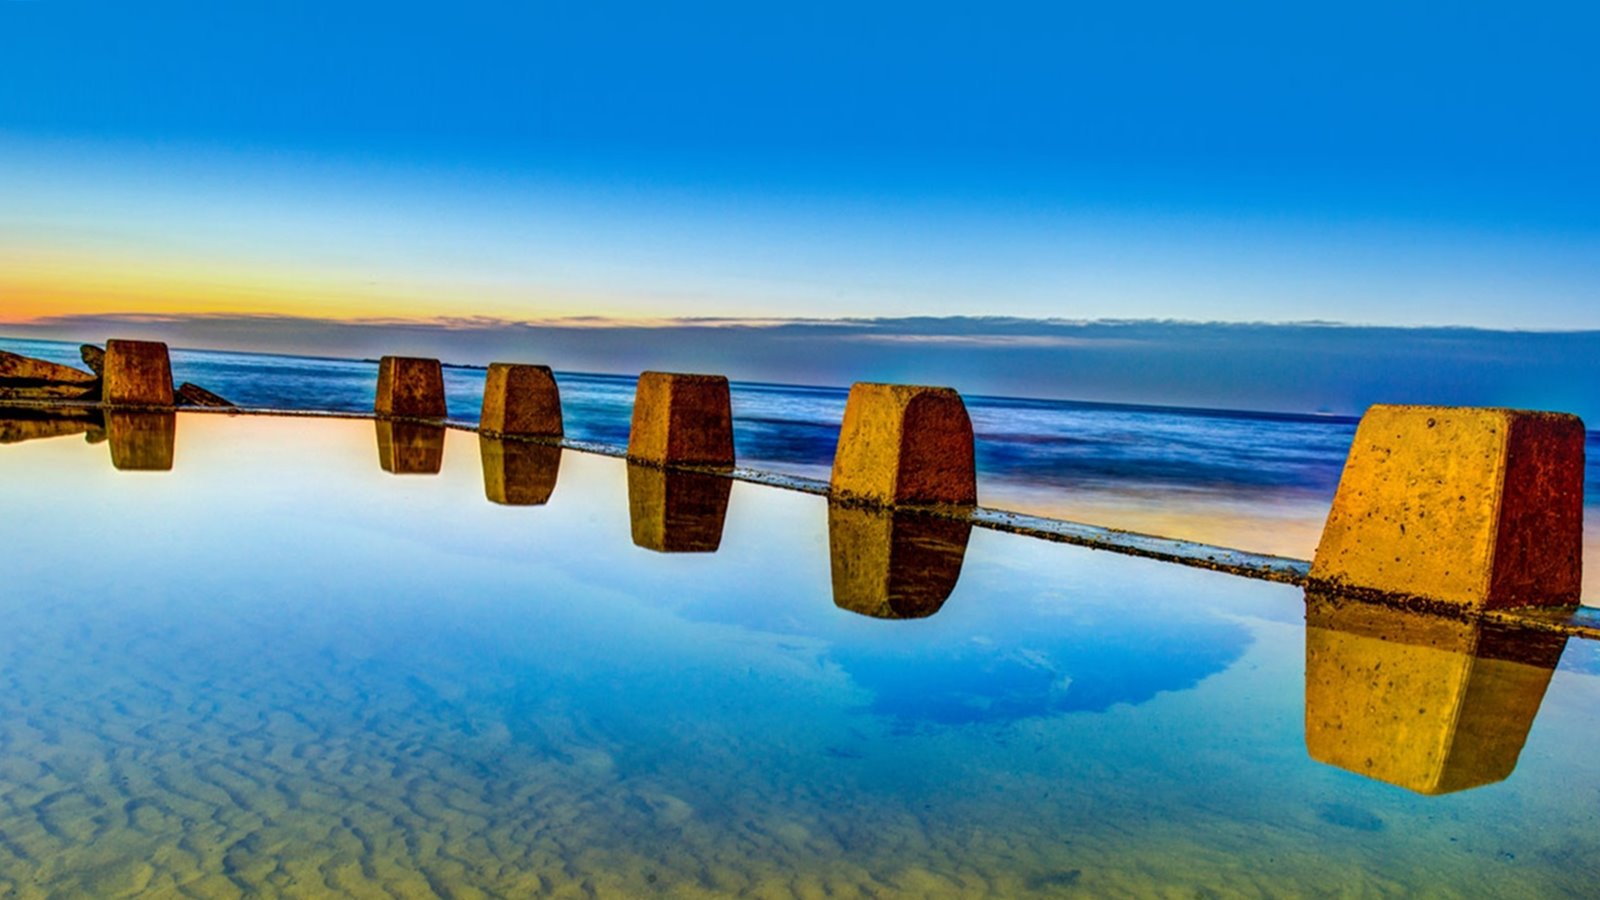 pleasant calm mobile backgrounds coogee beach australia sydney desktop pics free hd download